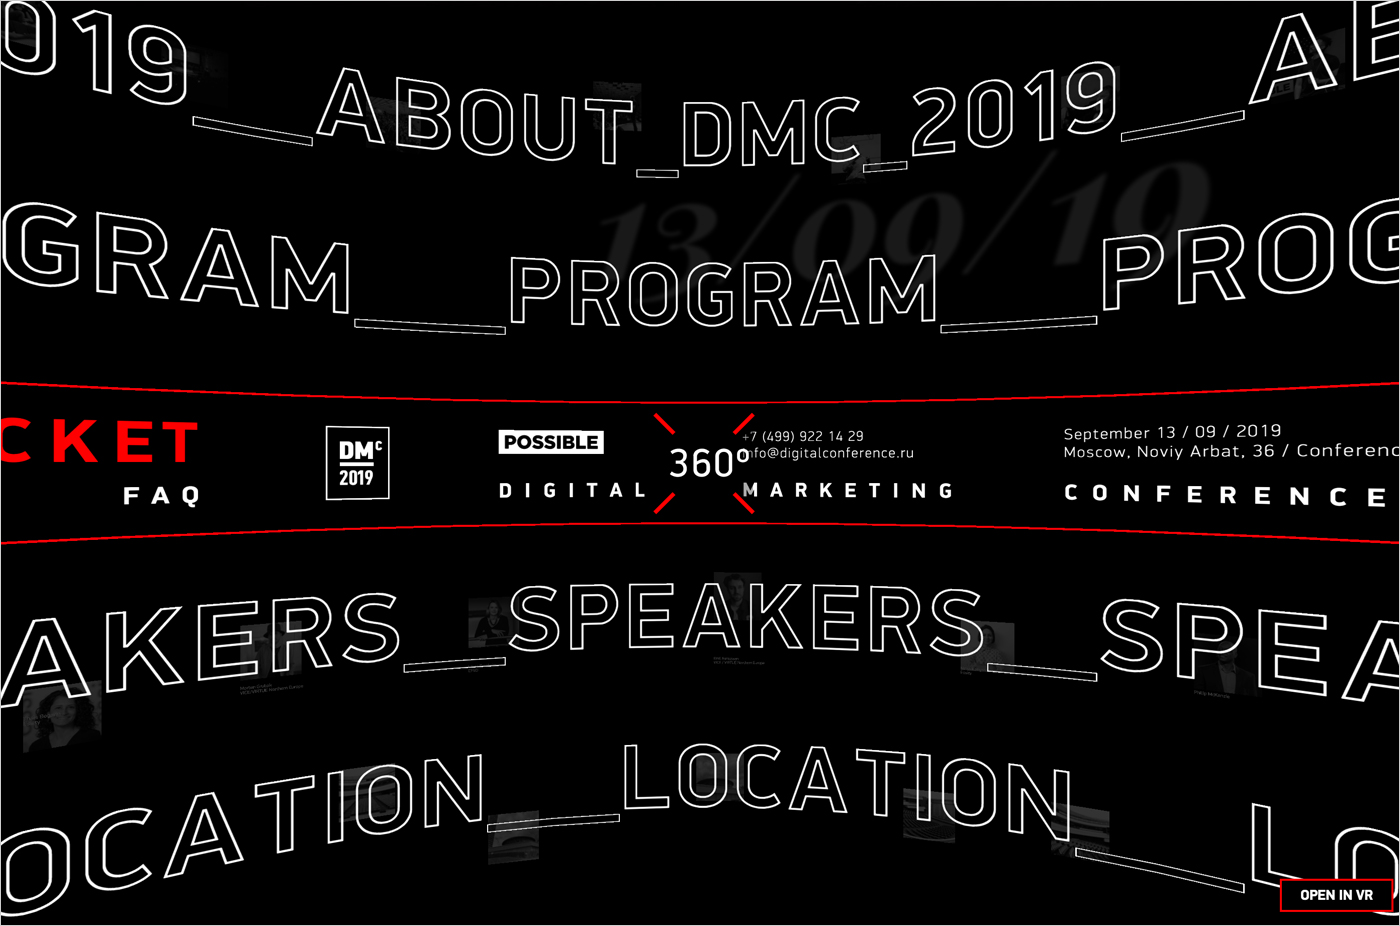 Digital Marketing Conference 2019ウェブサイトの画面キャプチャ画像